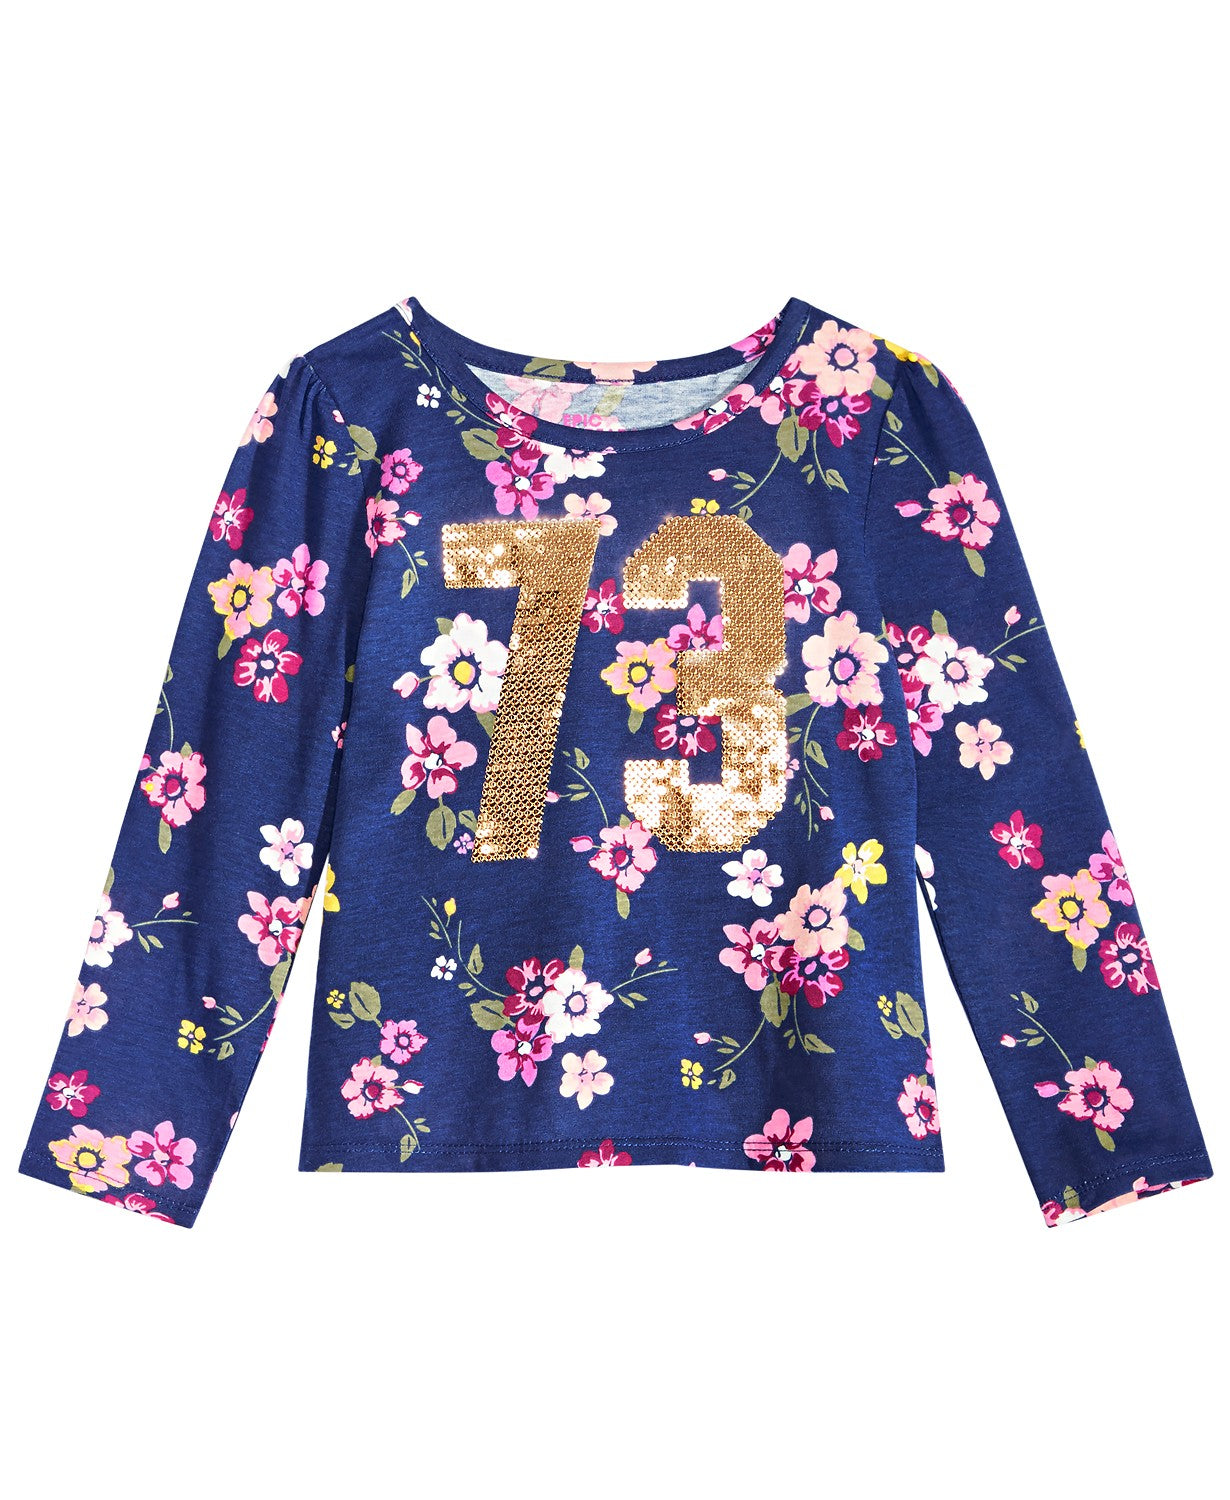 Epic Threads Toddler Girls Sequin Floral Print T-Shirt